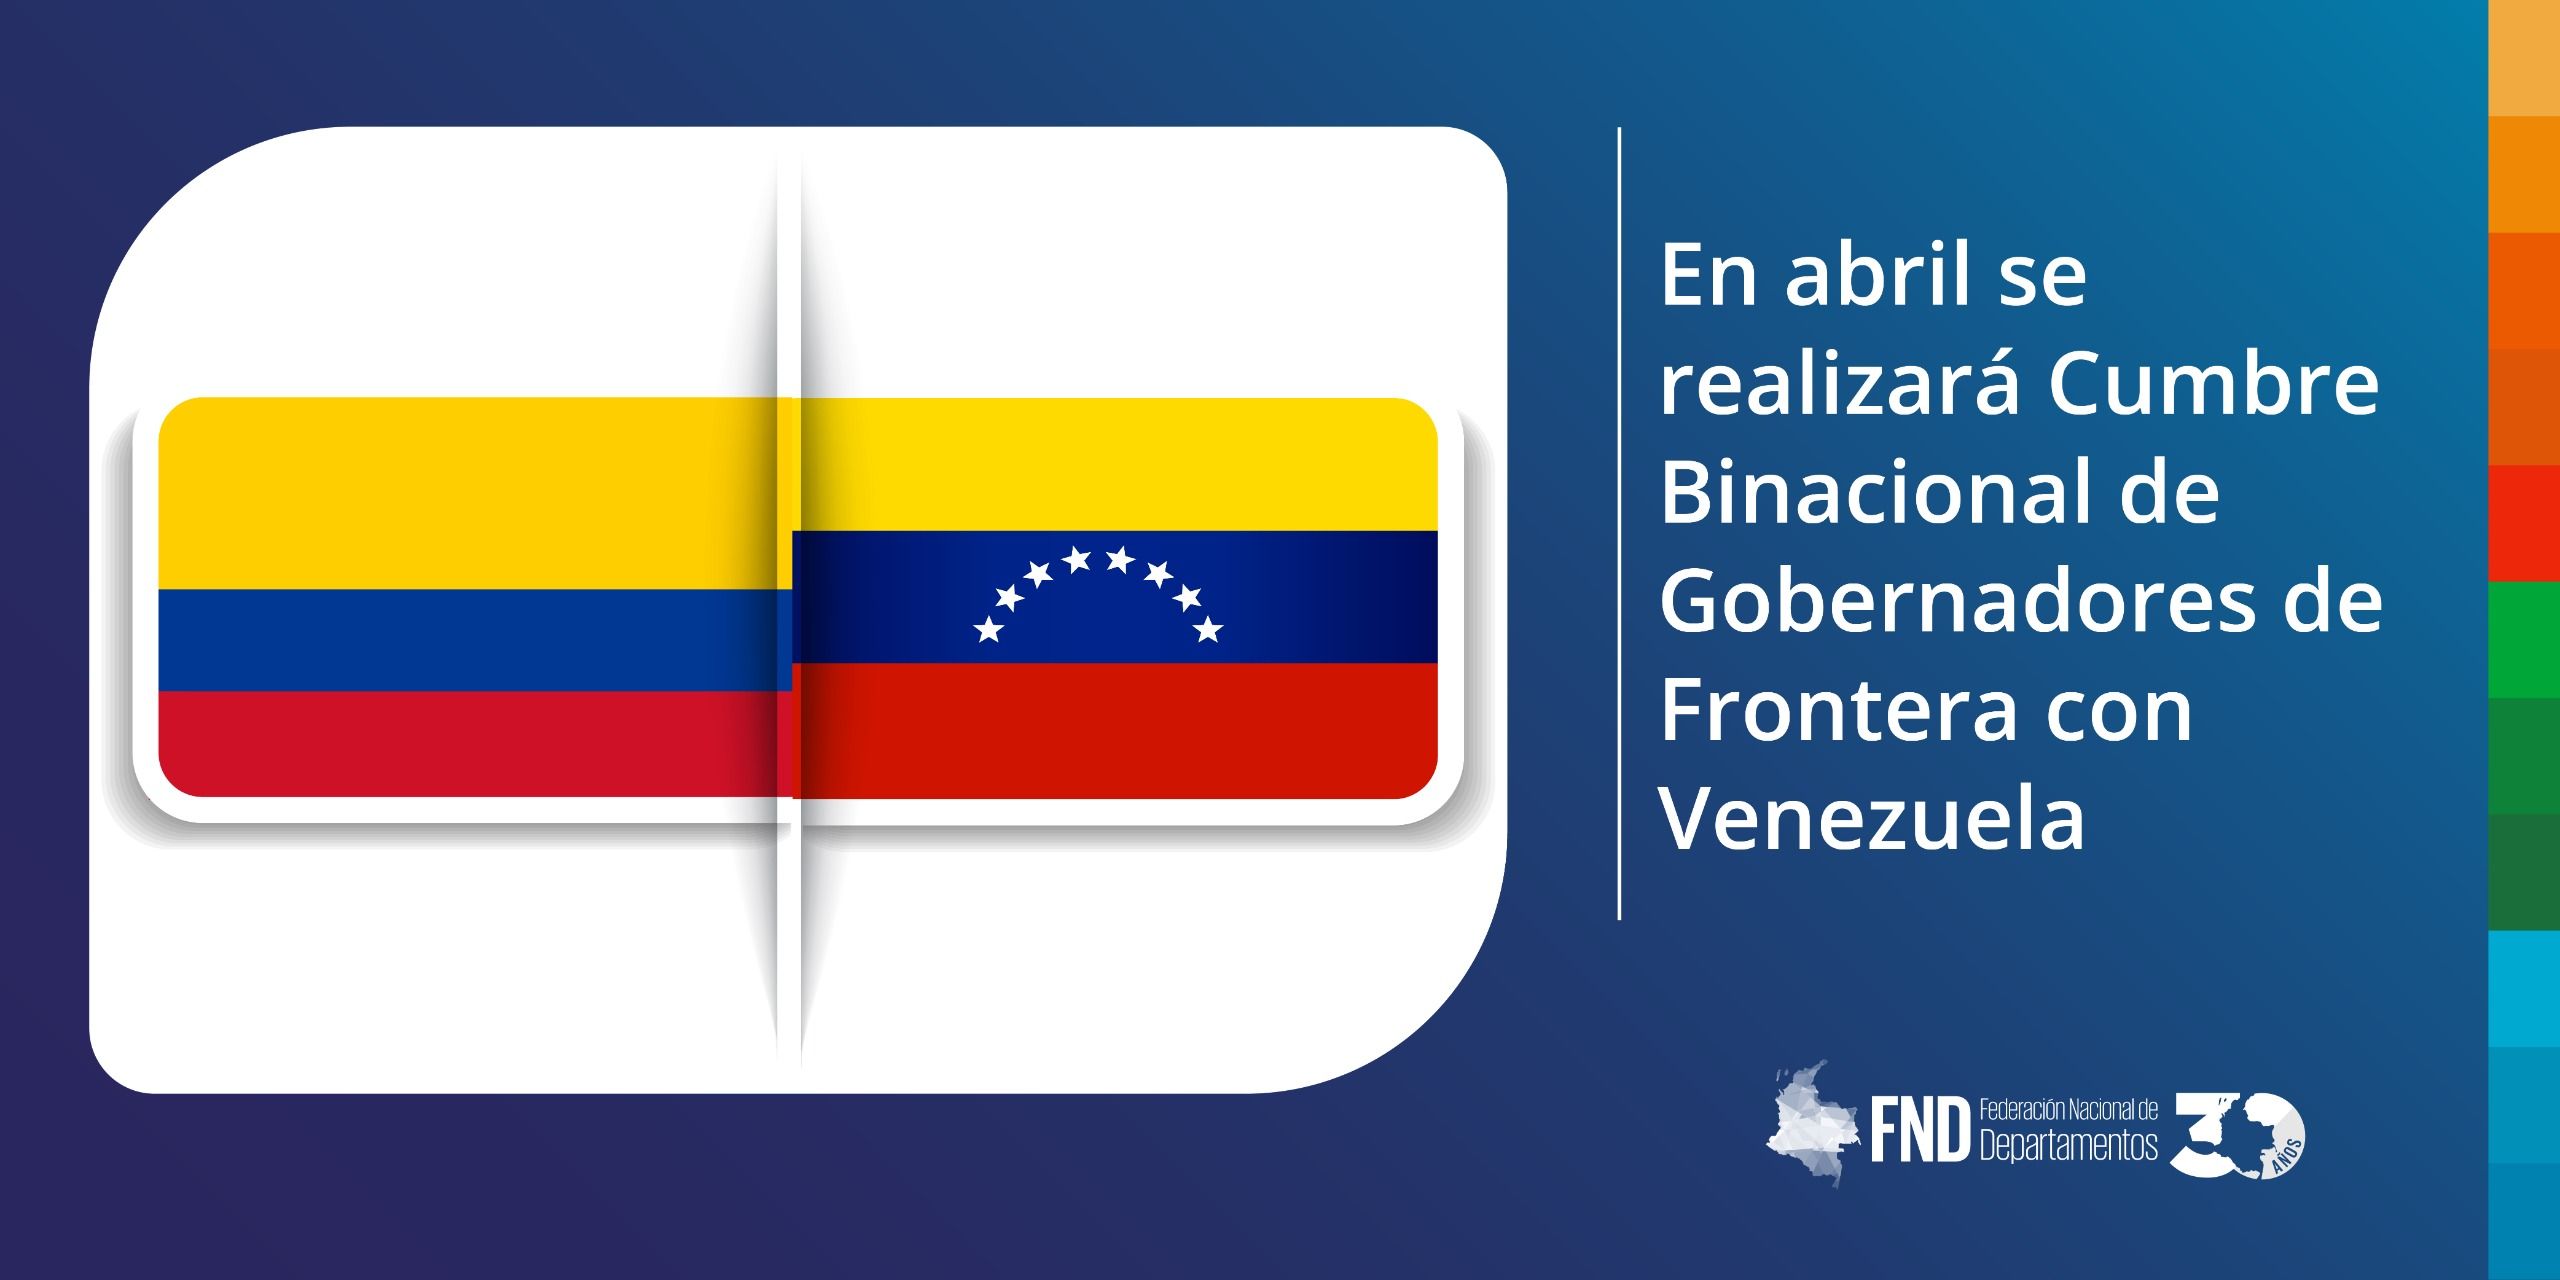 En abril se realizará Cumbre Binacional de Gobernadores de Frontera con Venezuela